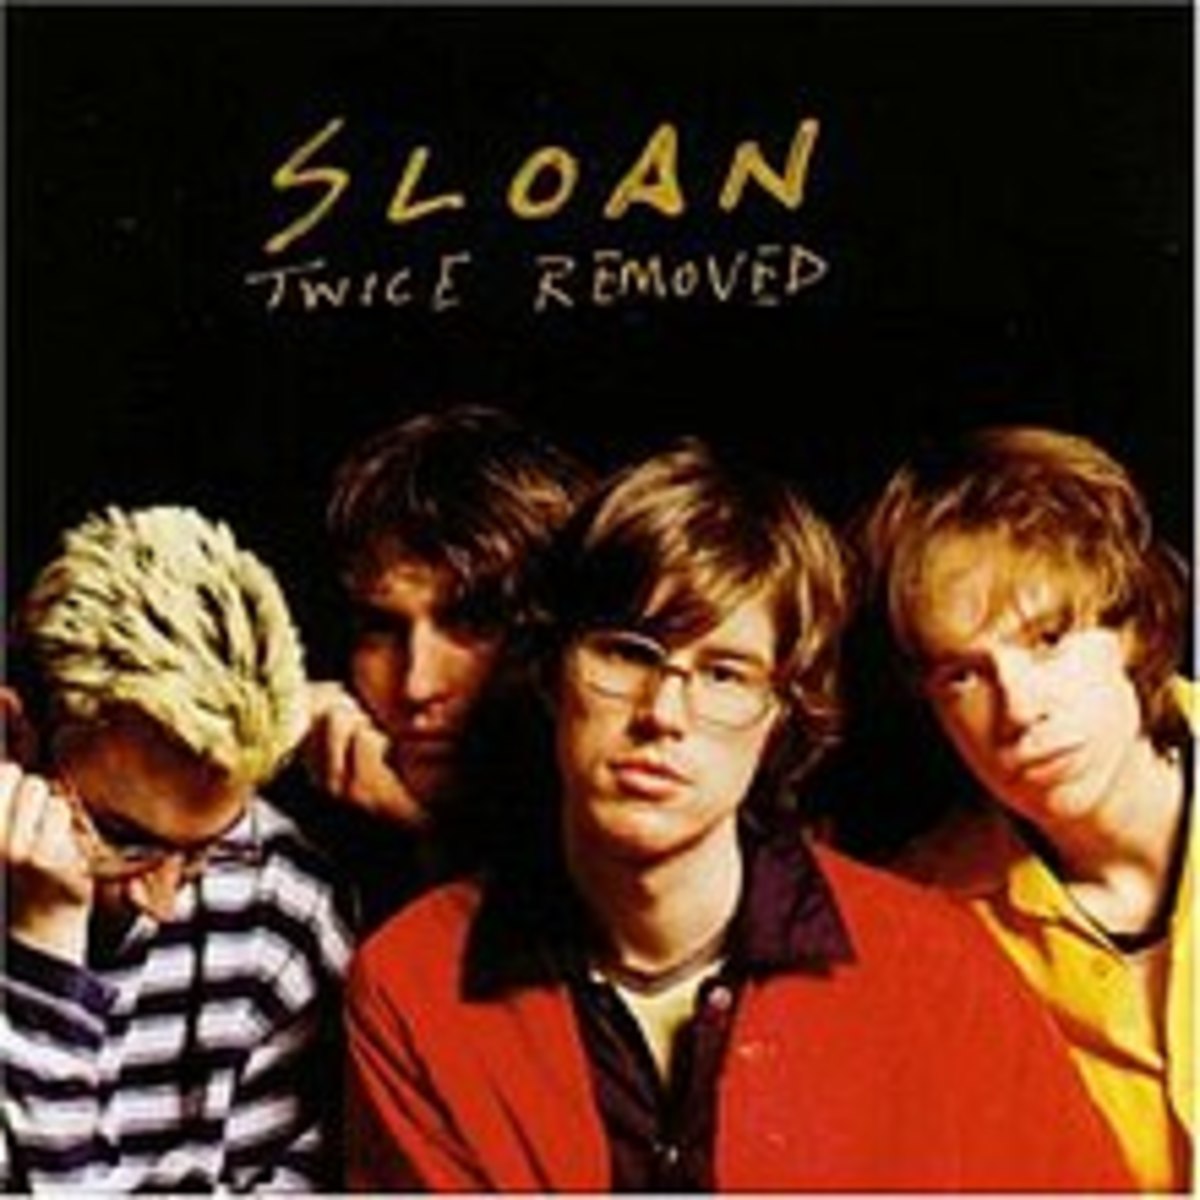 Twice_Removed_(Sloan_album)